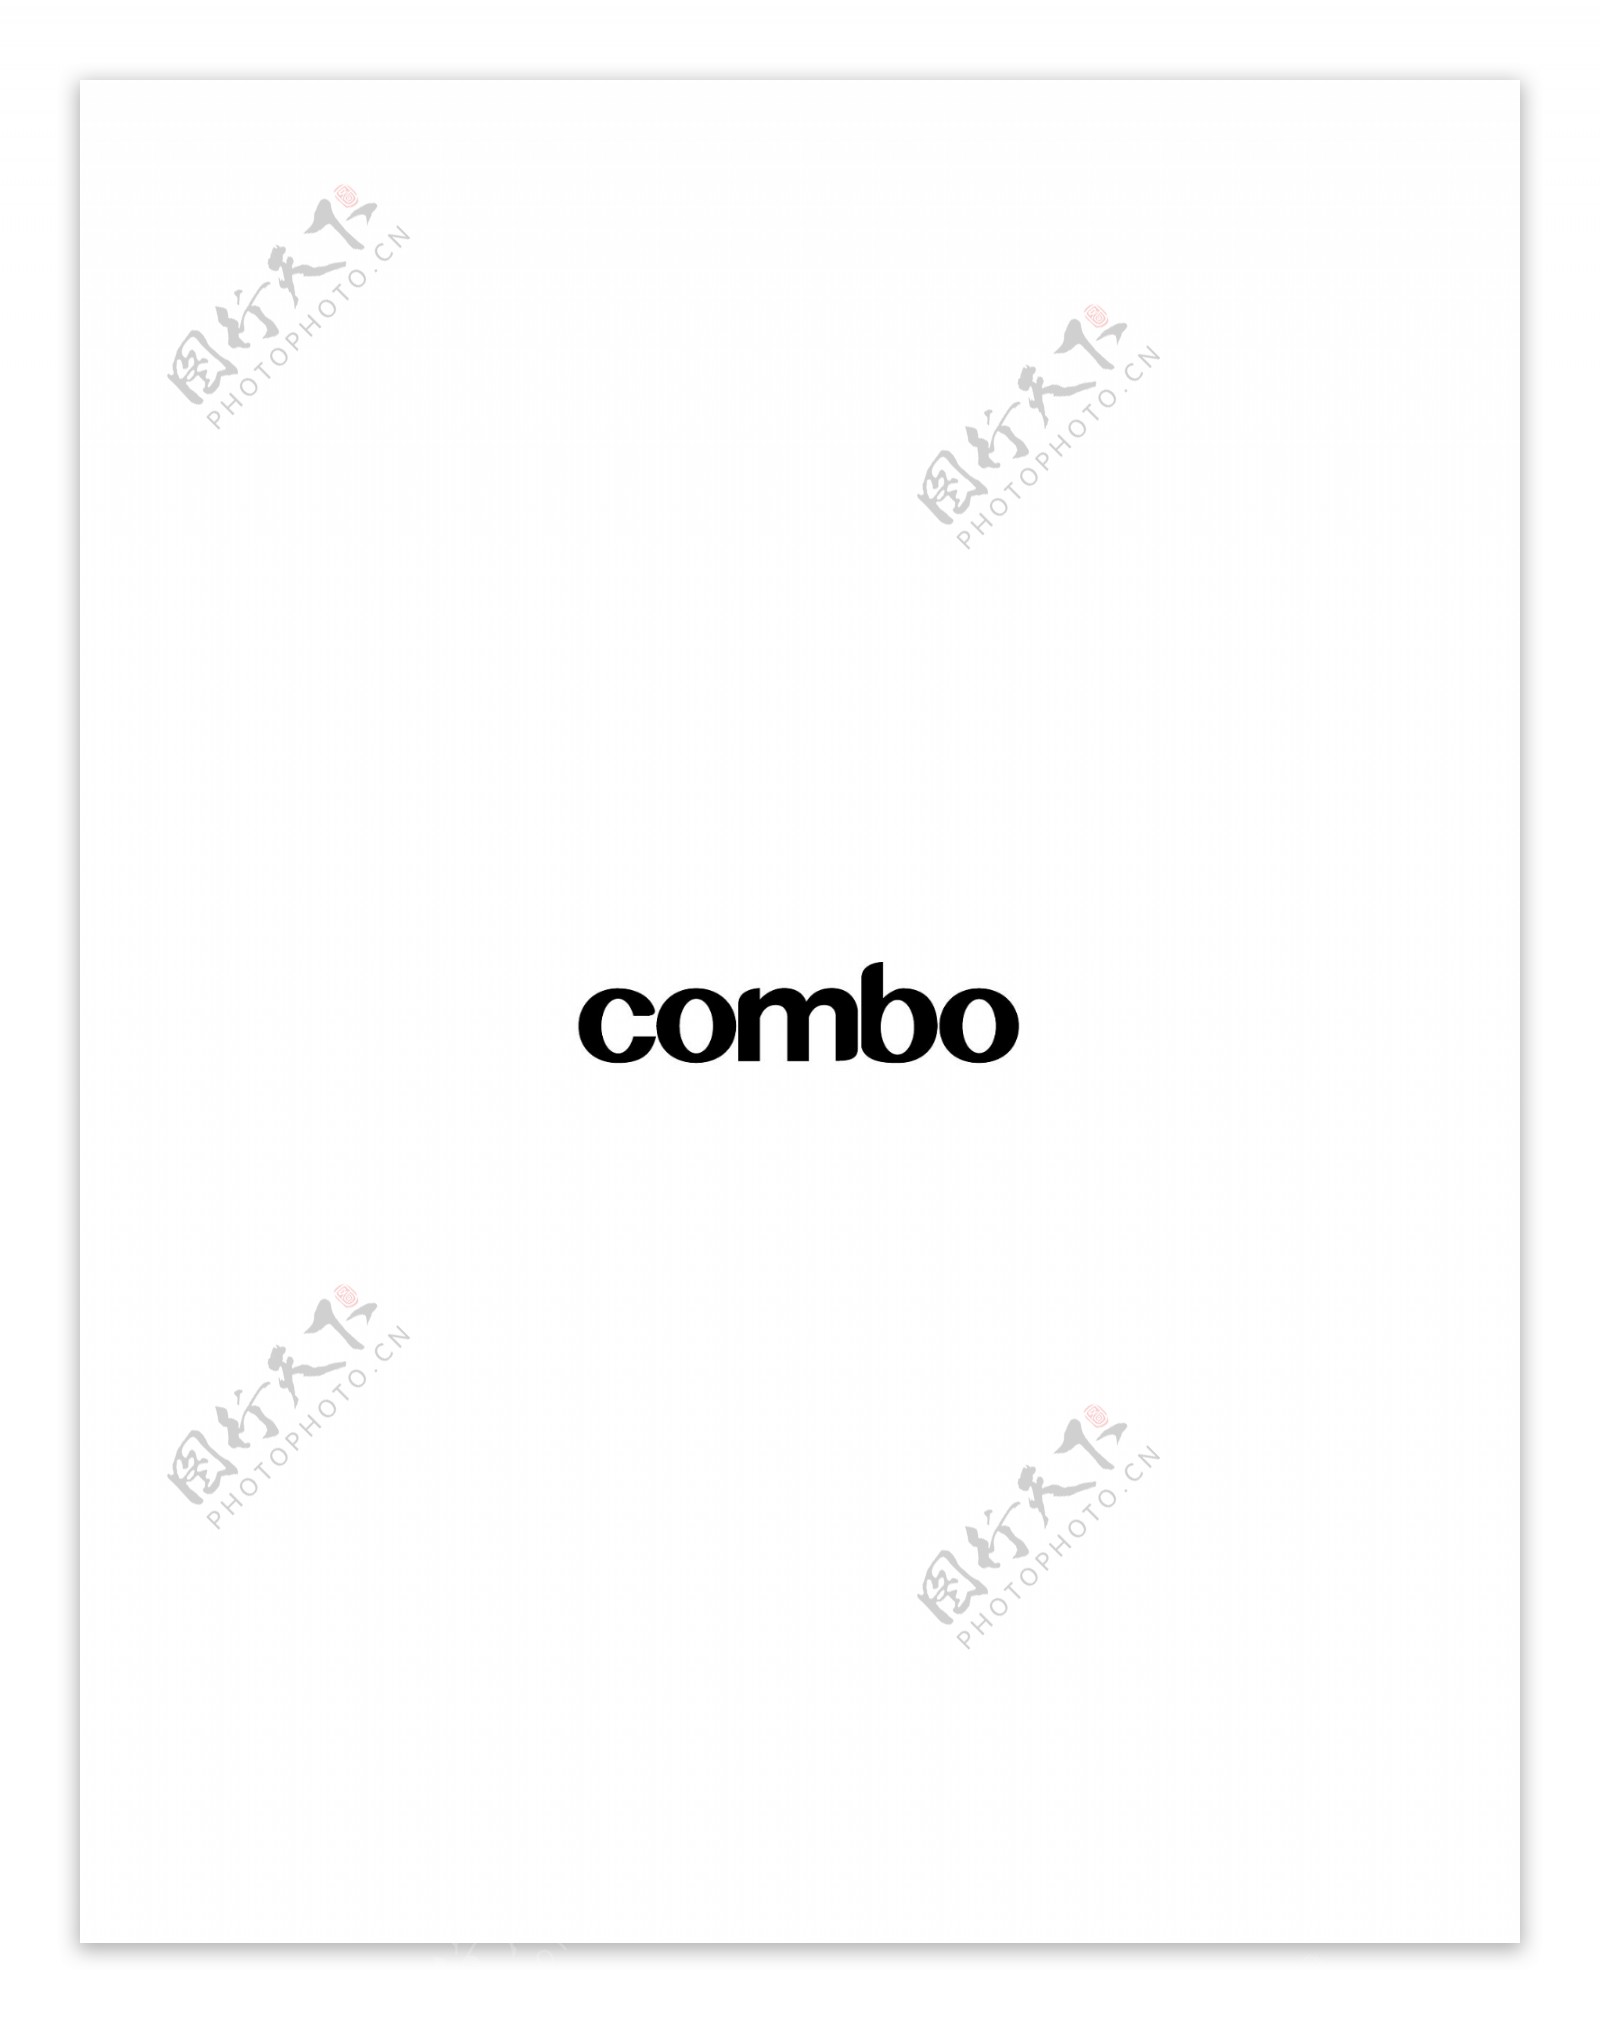 Combologo设计欣赏电脑相关行业LOGO标志Combo下载标志设计欣赏